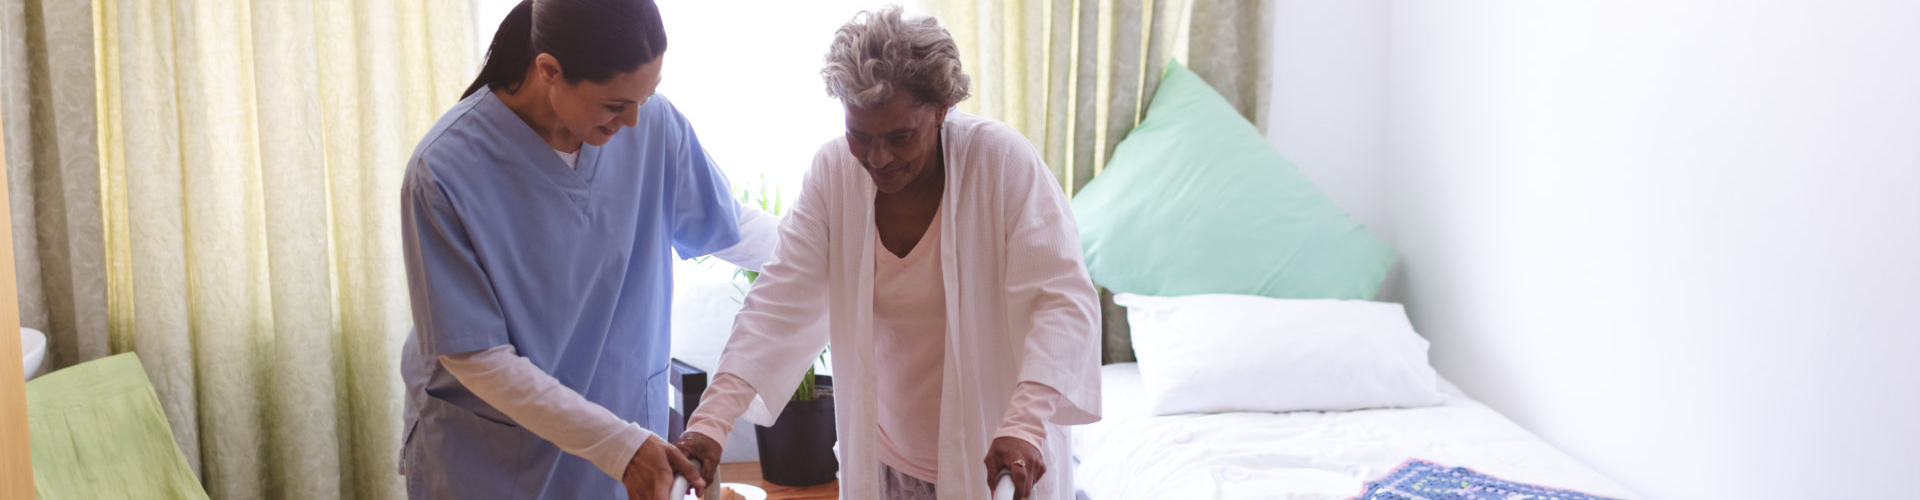 caregiver assisting elderly woman in walking